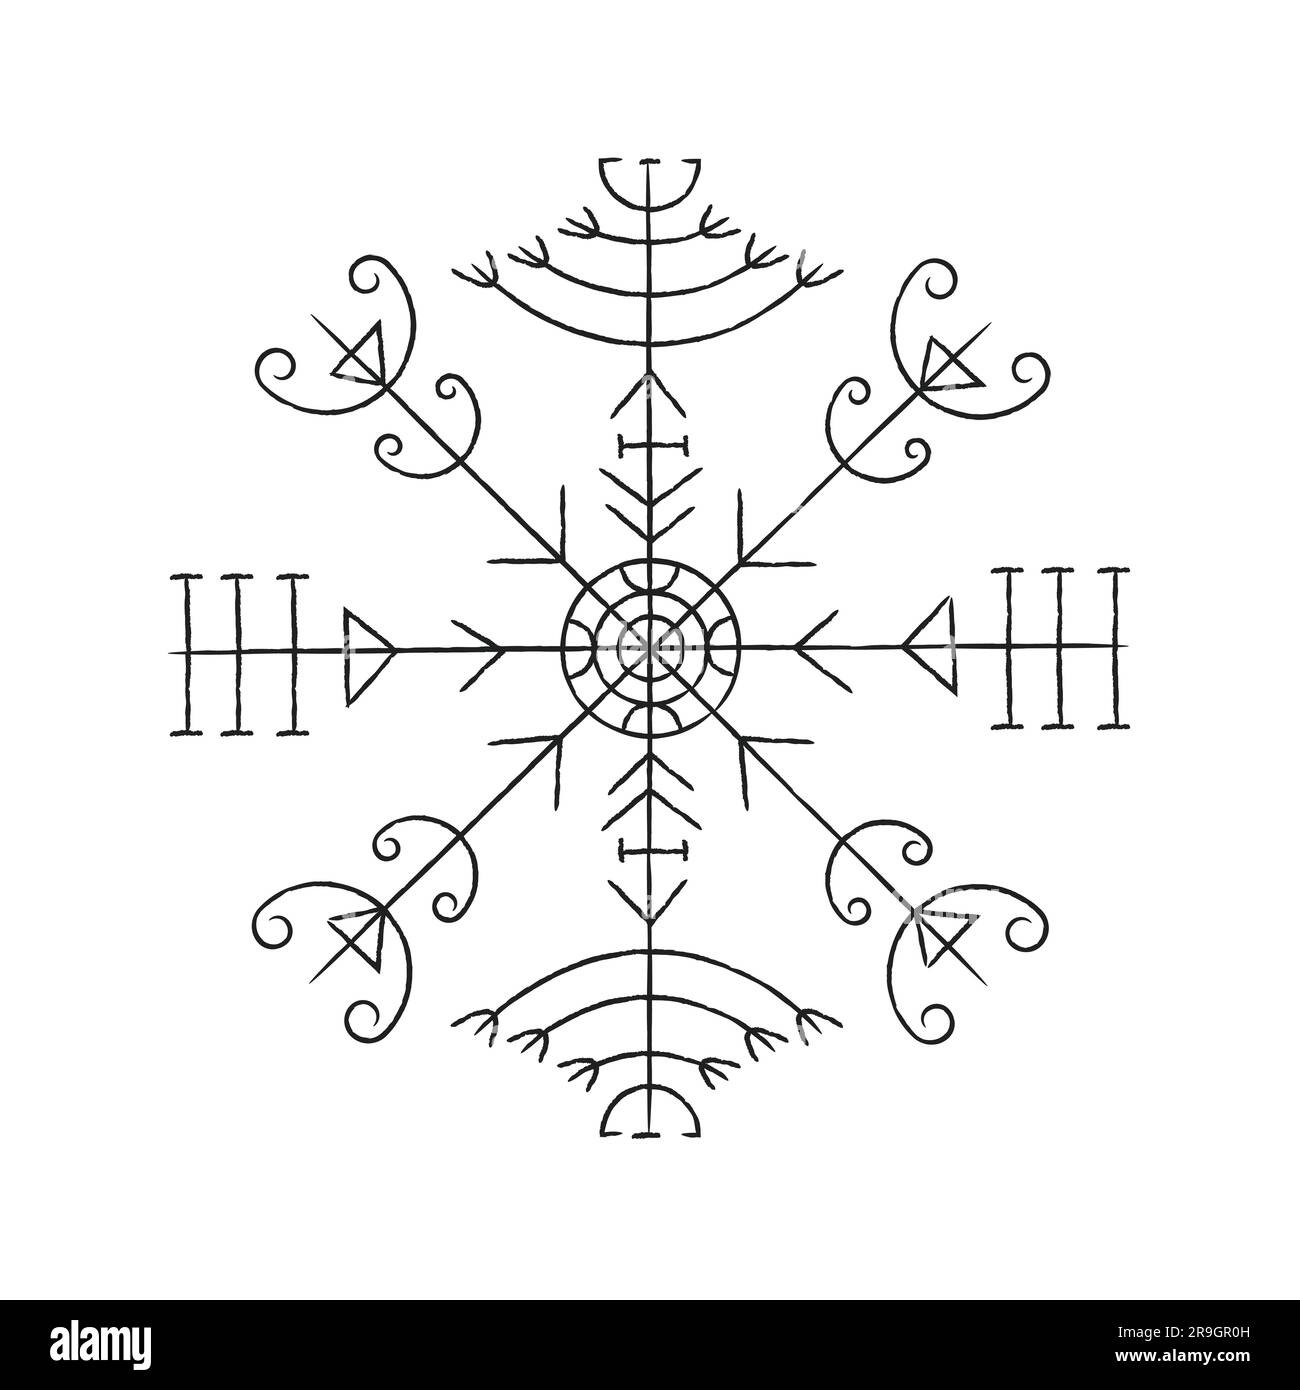 Veldismagn Icelandic rune protection symbol Stock Vector